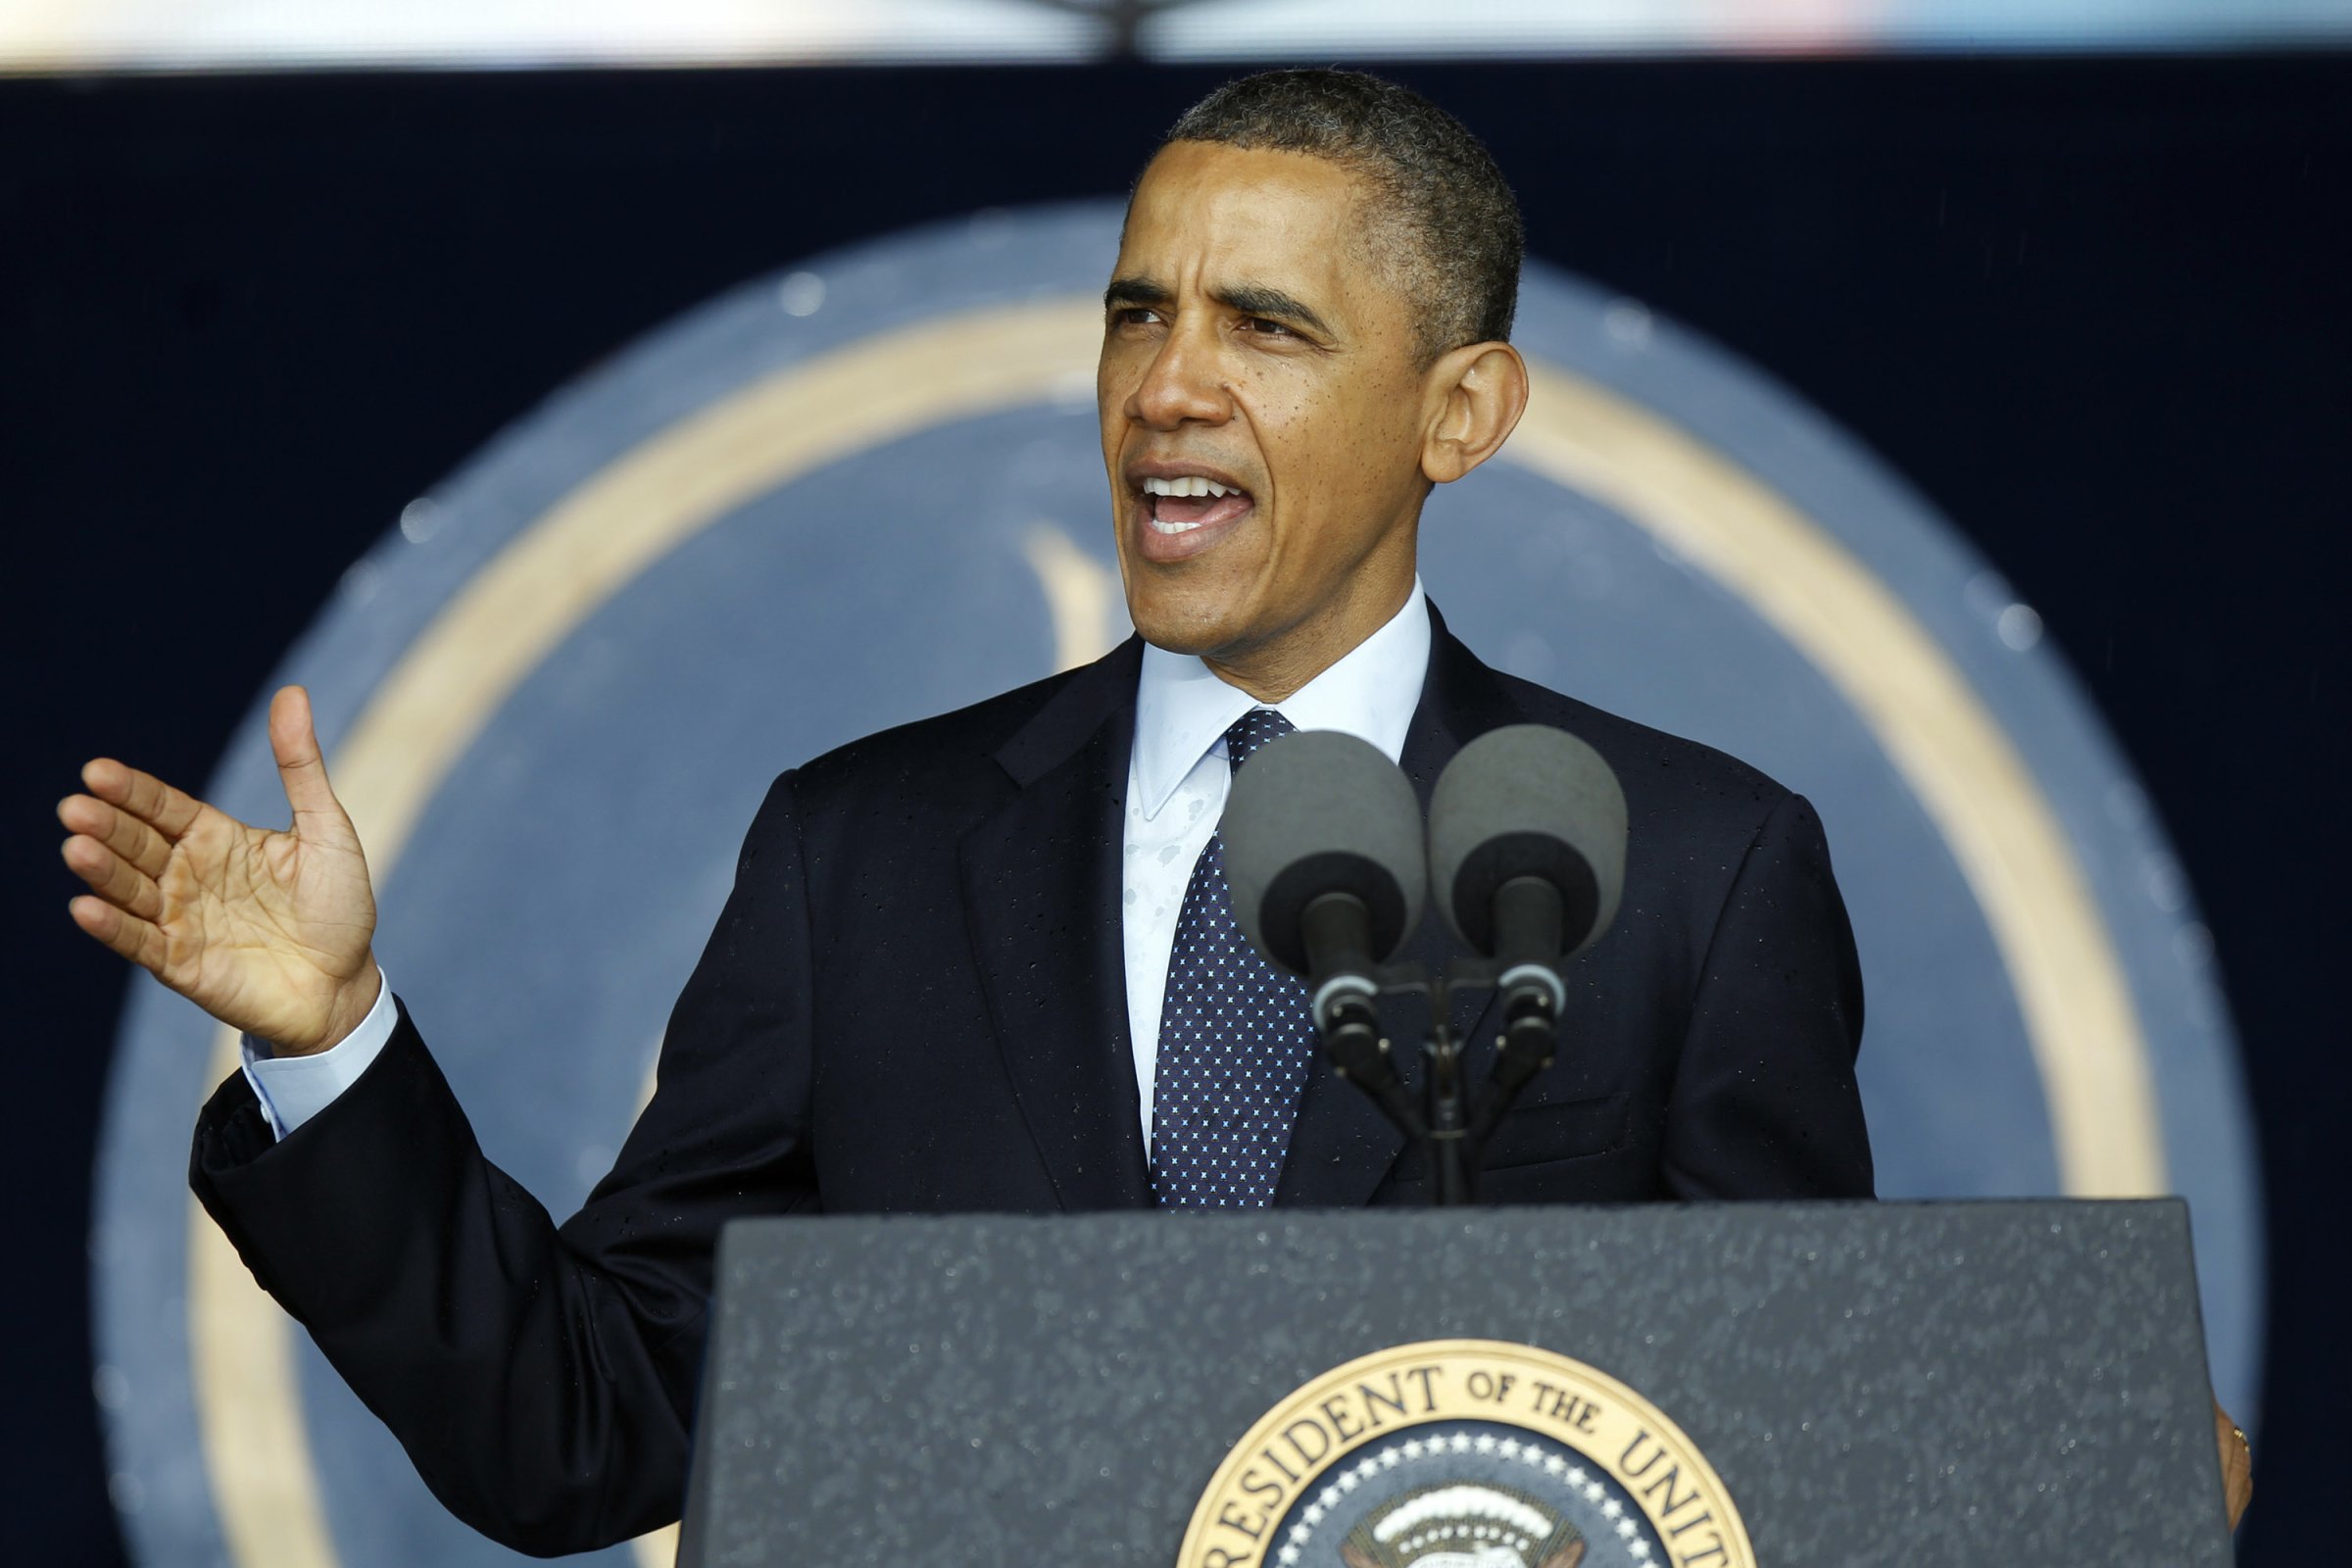 Obama Speaks At U.S. Naval Academy Graduation